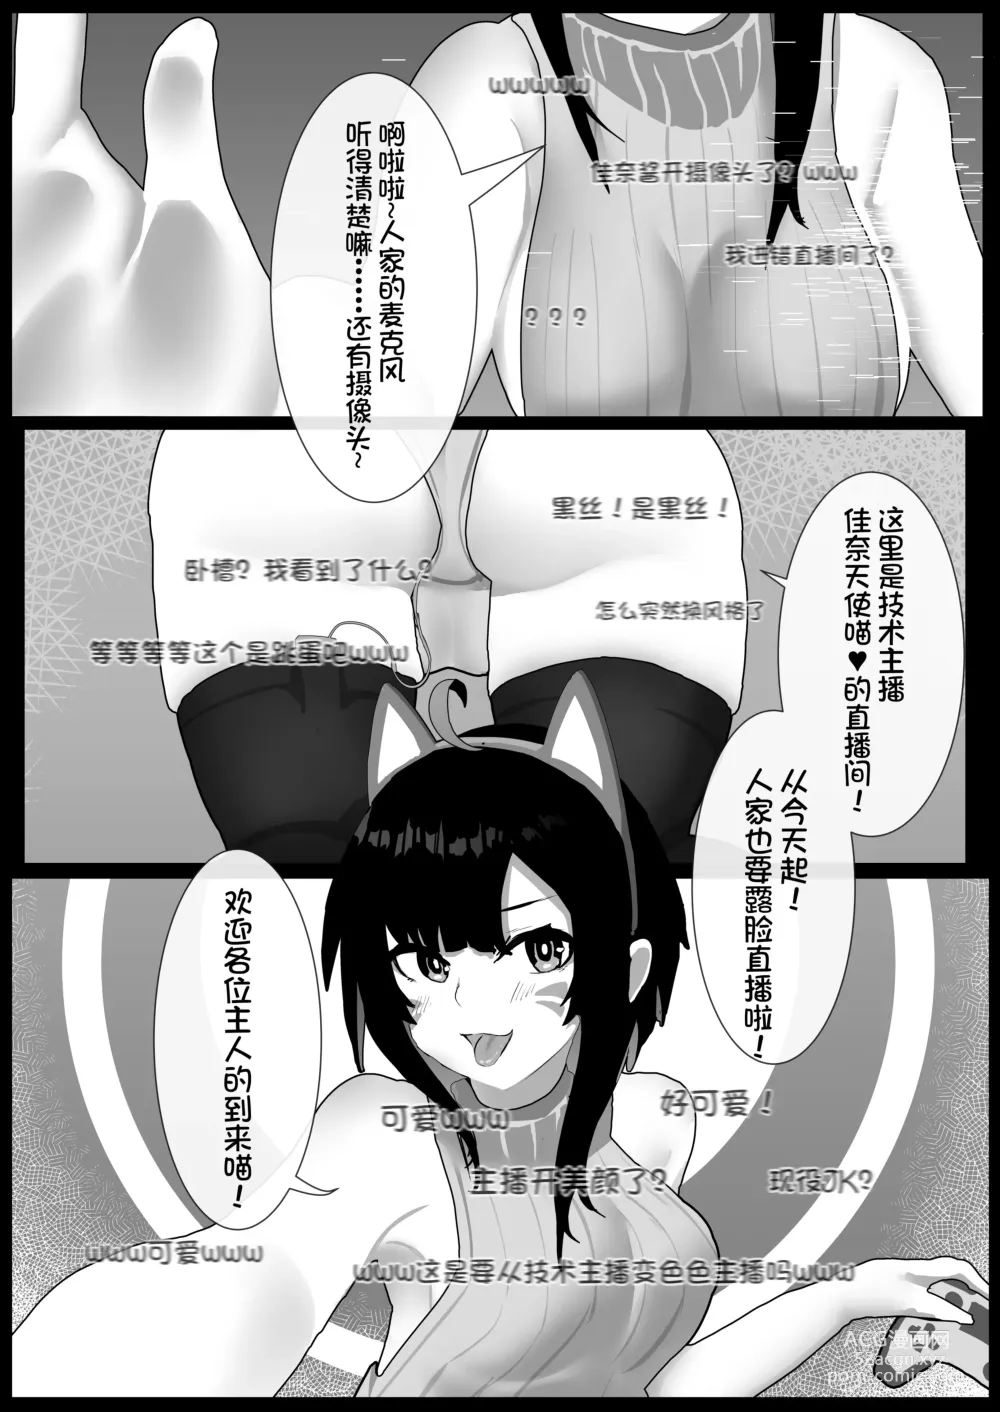 Page 5 of manga 皮物問題學生 #1 渡邊佳奈、2